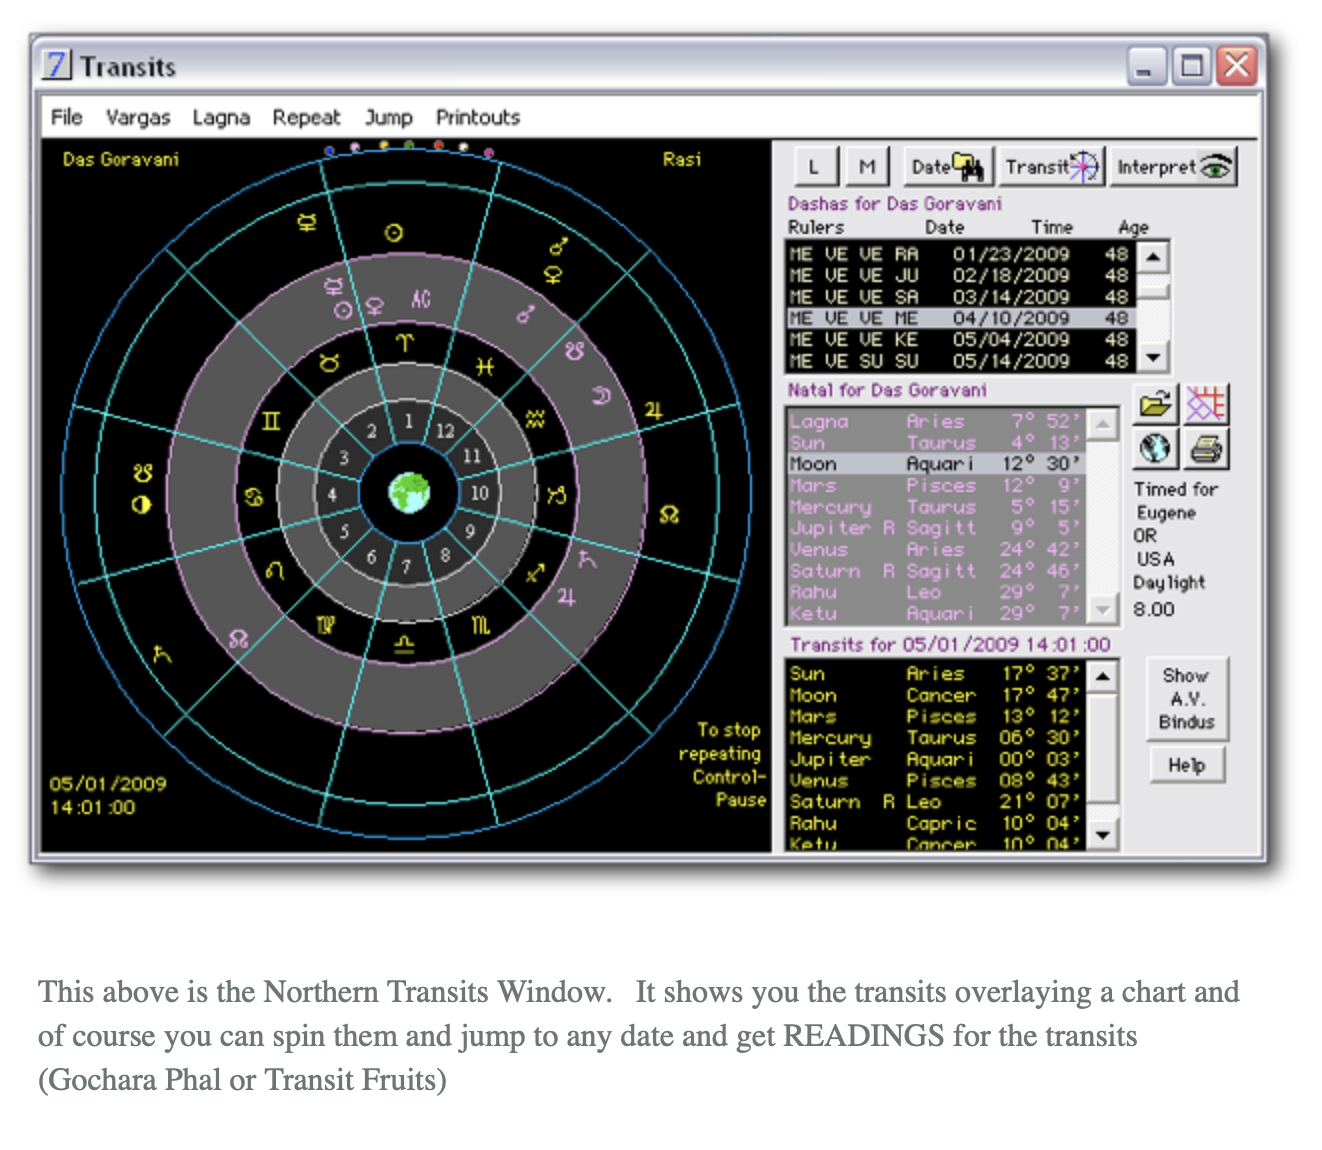 Jyotish Studio Vedic Astrology Software for Windows and Macintosh.